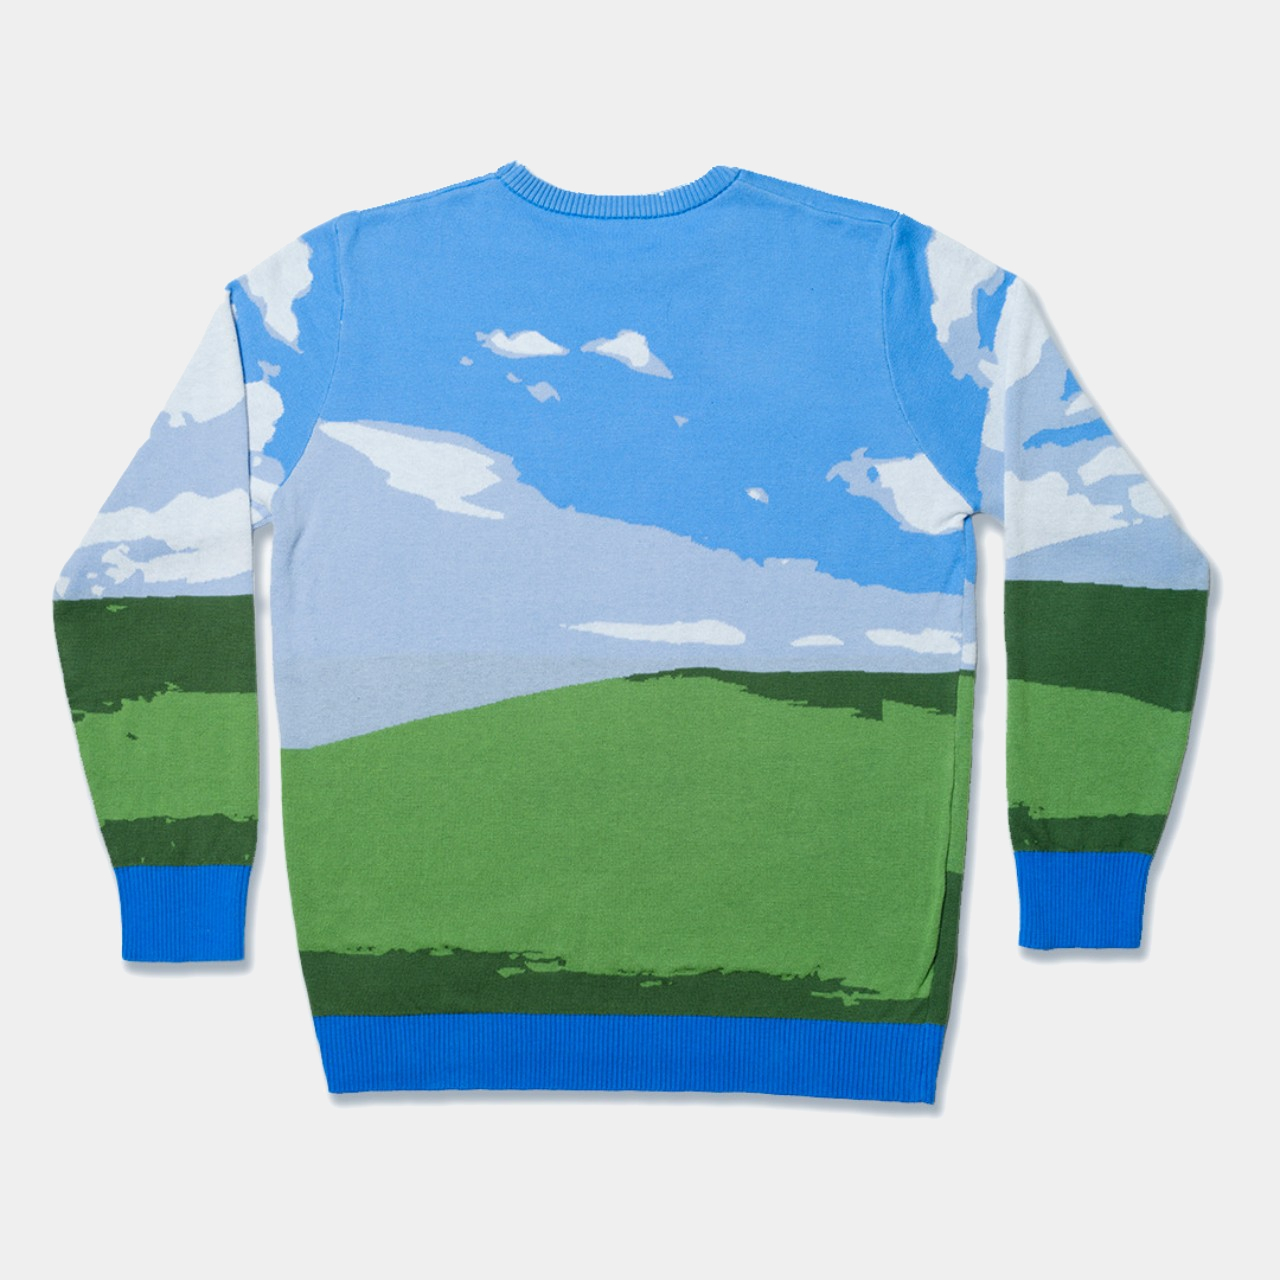 Microsoft's Nostalgic Eco-Friendly Ugly Sweater: A Windows XP Tribute